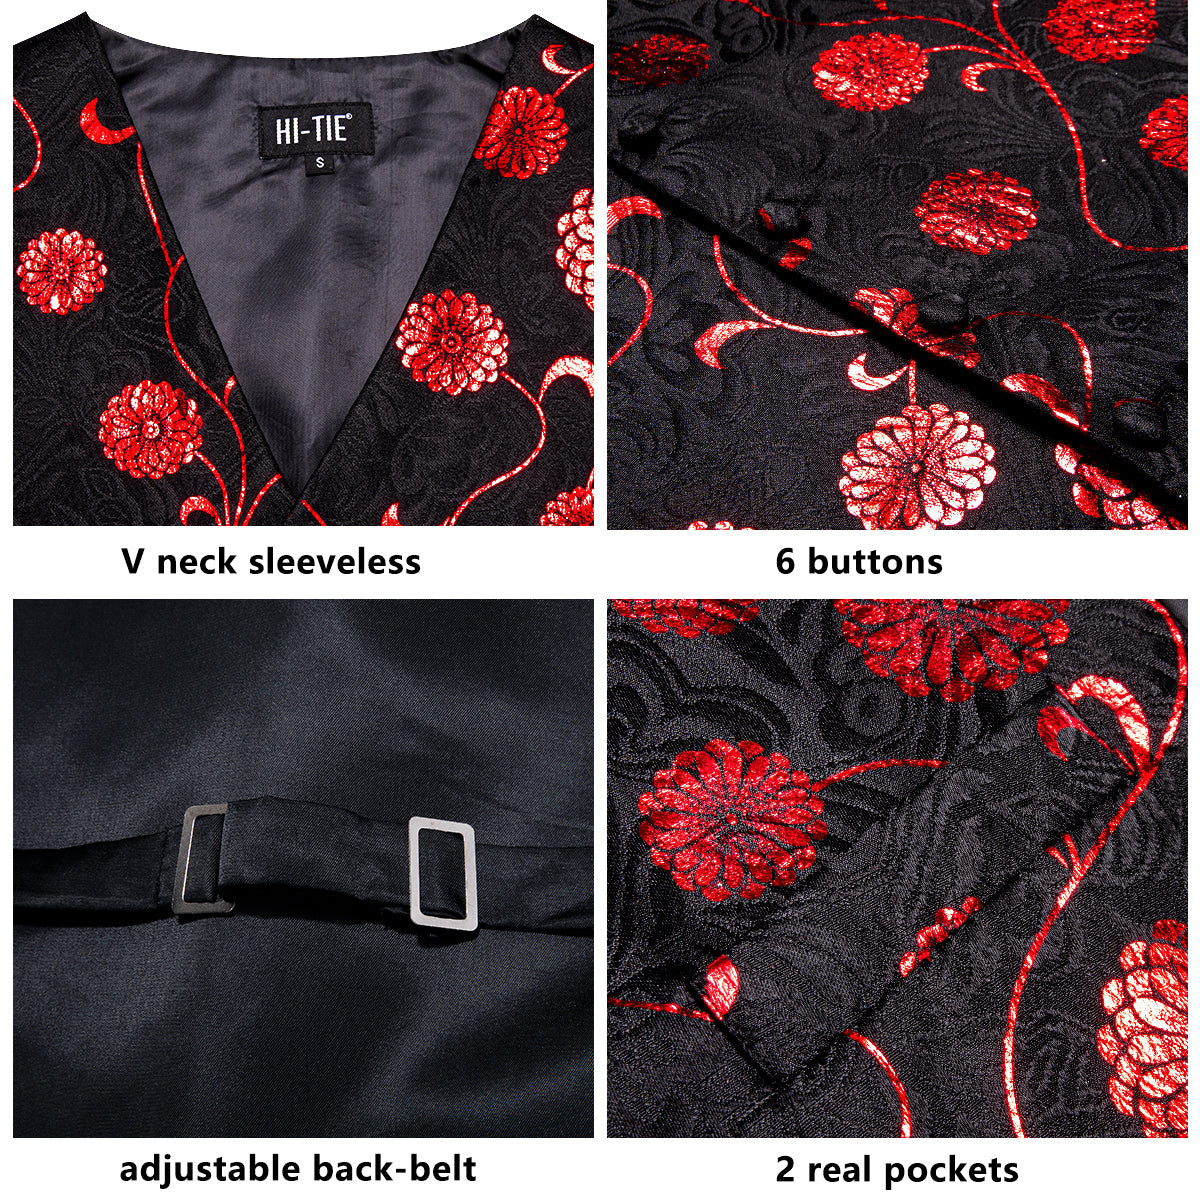 New Arrived Black Red Floral Silk Men's Vest Hanky Cufflinks Tie Set Waistcoat Suit Set